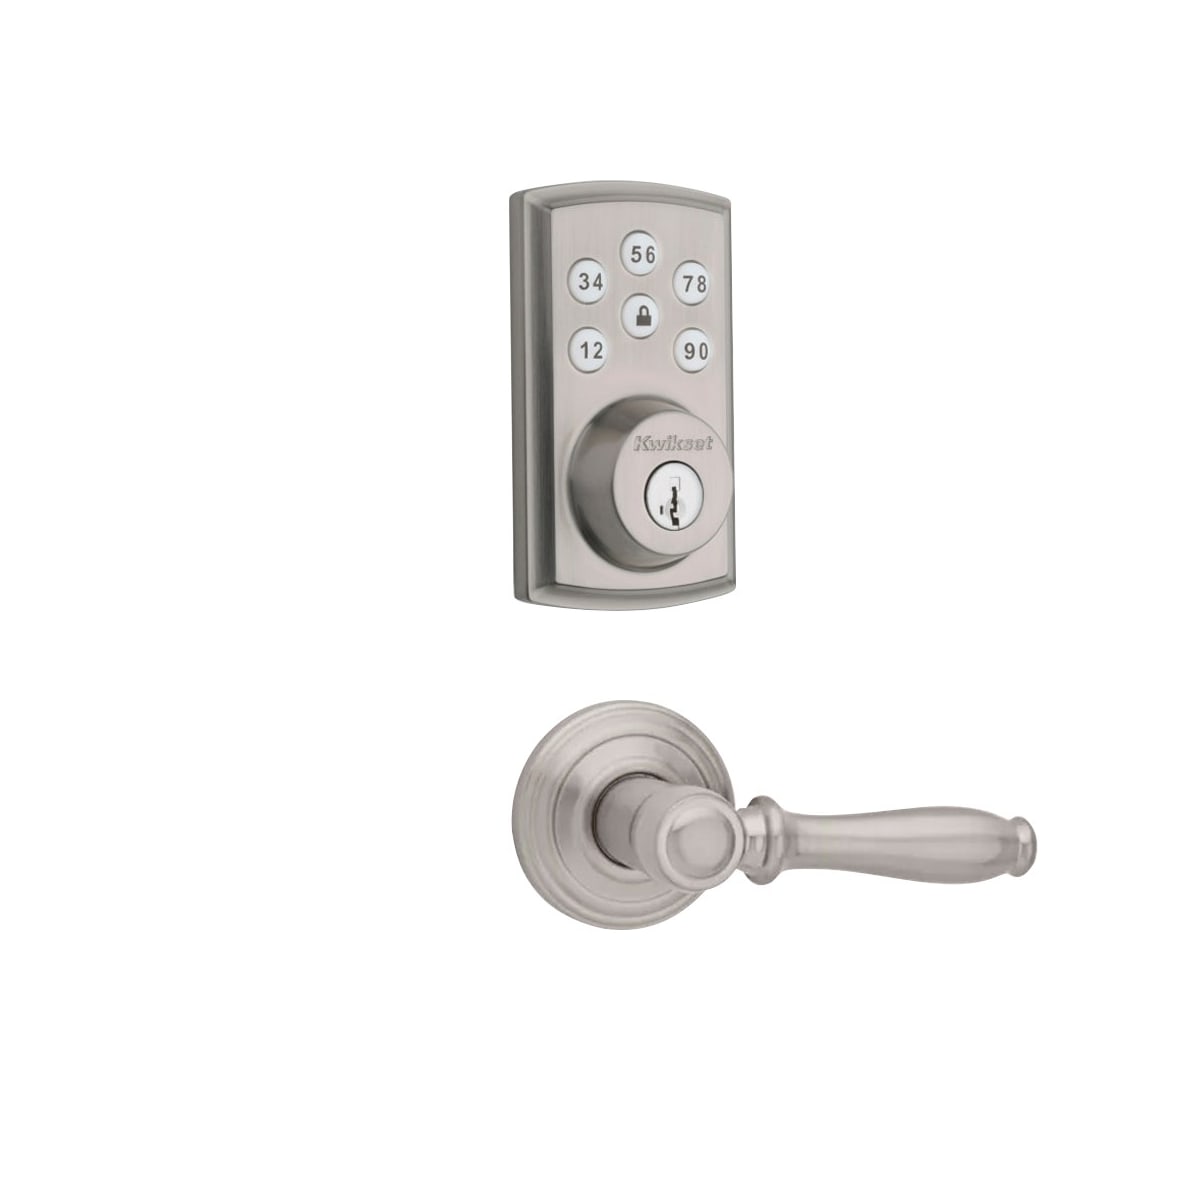 Kwikset SmartCode 888 Deadbolt Smart Lock Bronze Exterior Keypad WITH KEYS